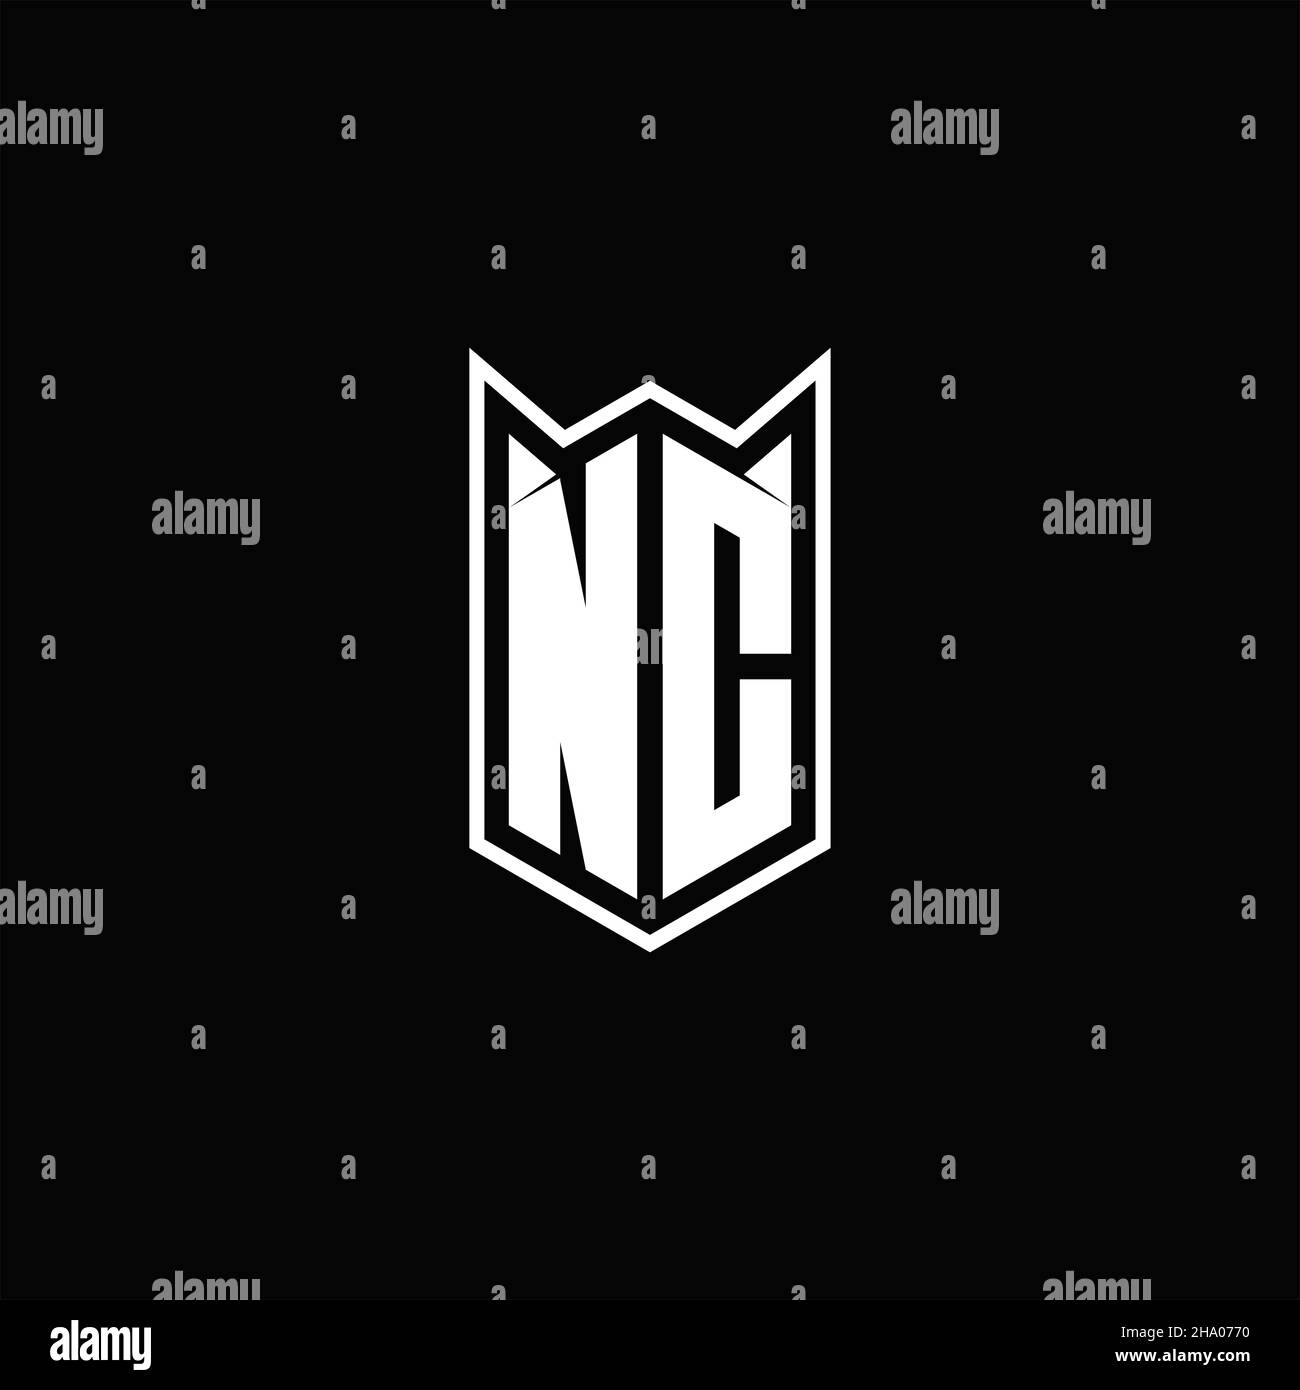 NC logo monogram emblem style with crown shape design template